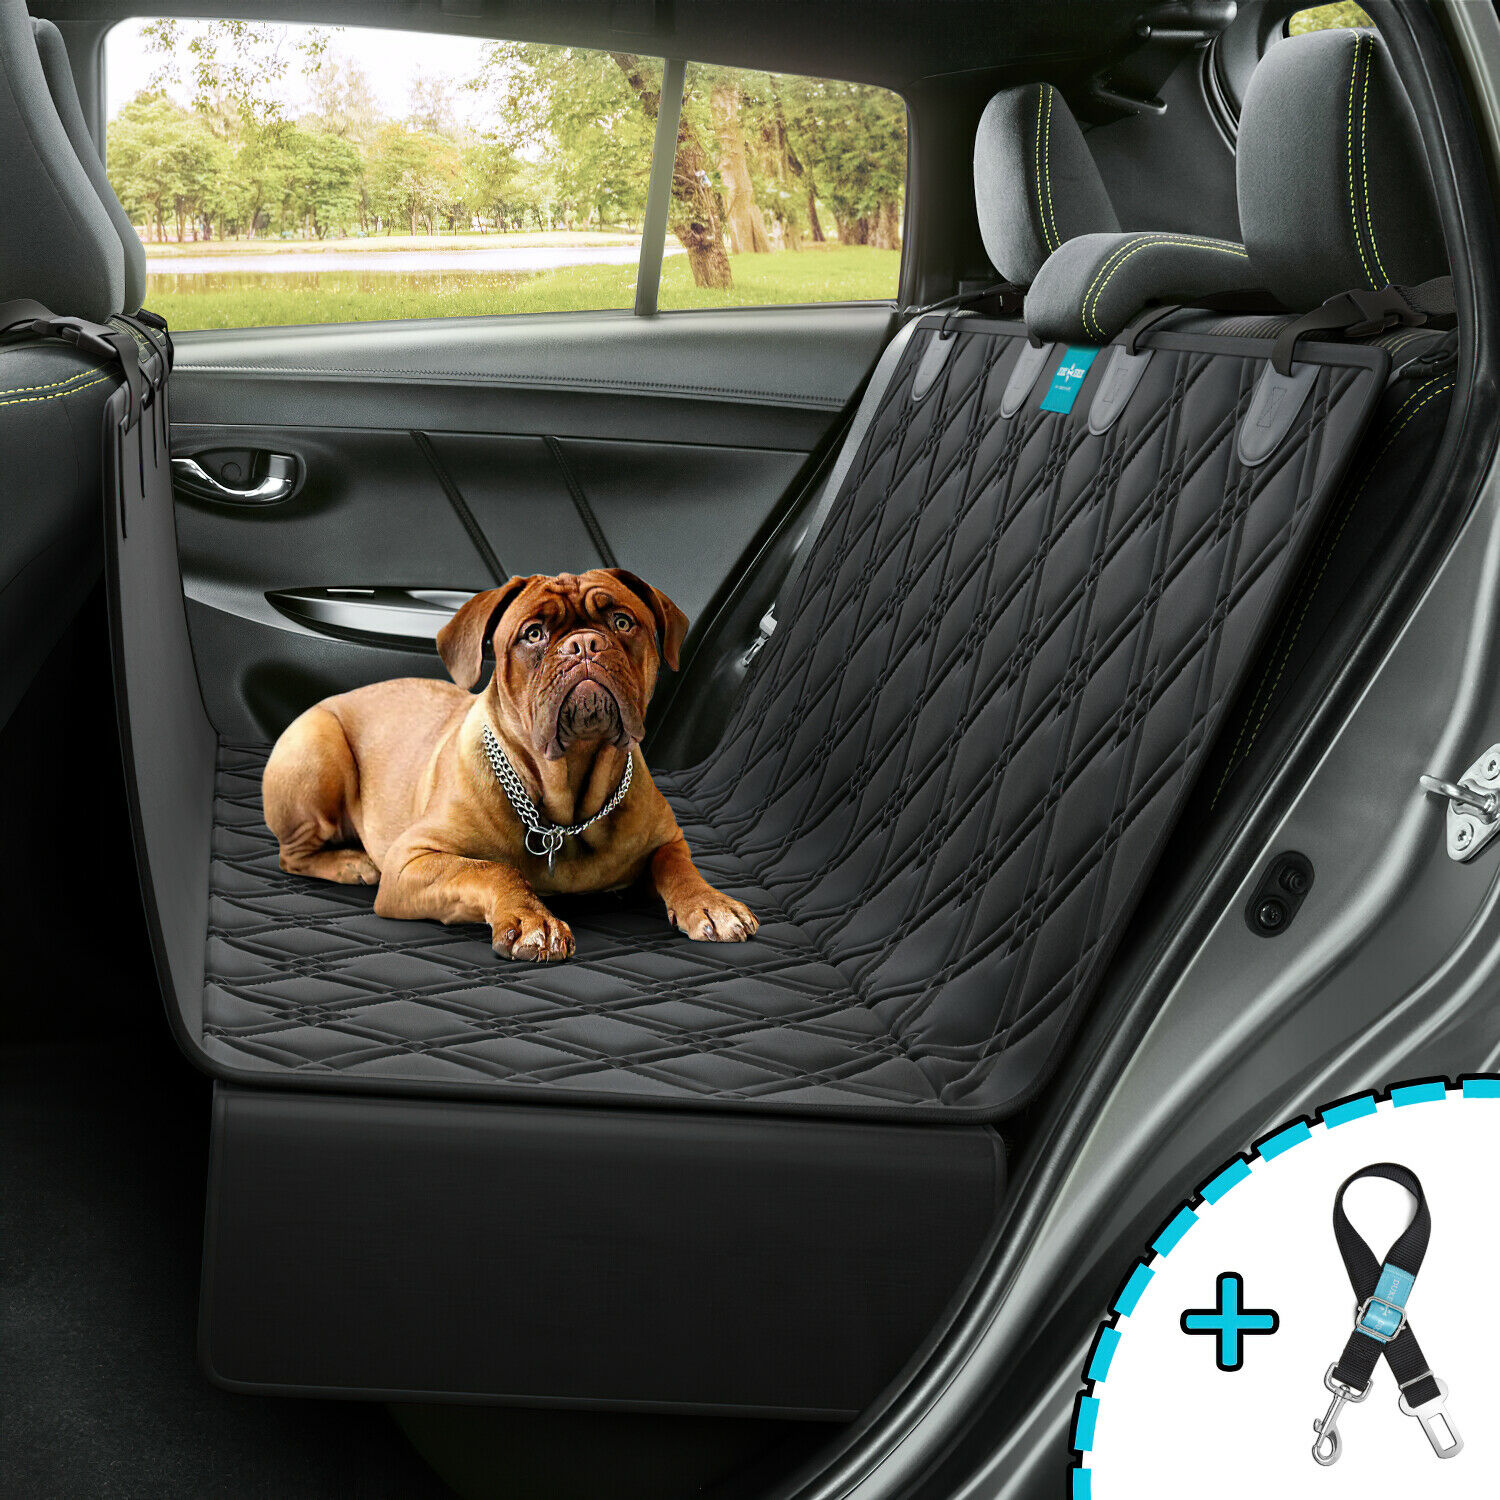 Dog Seat Cover Hammock For Backseat Durable Waterproof Car Truck Suv + Seatbelt